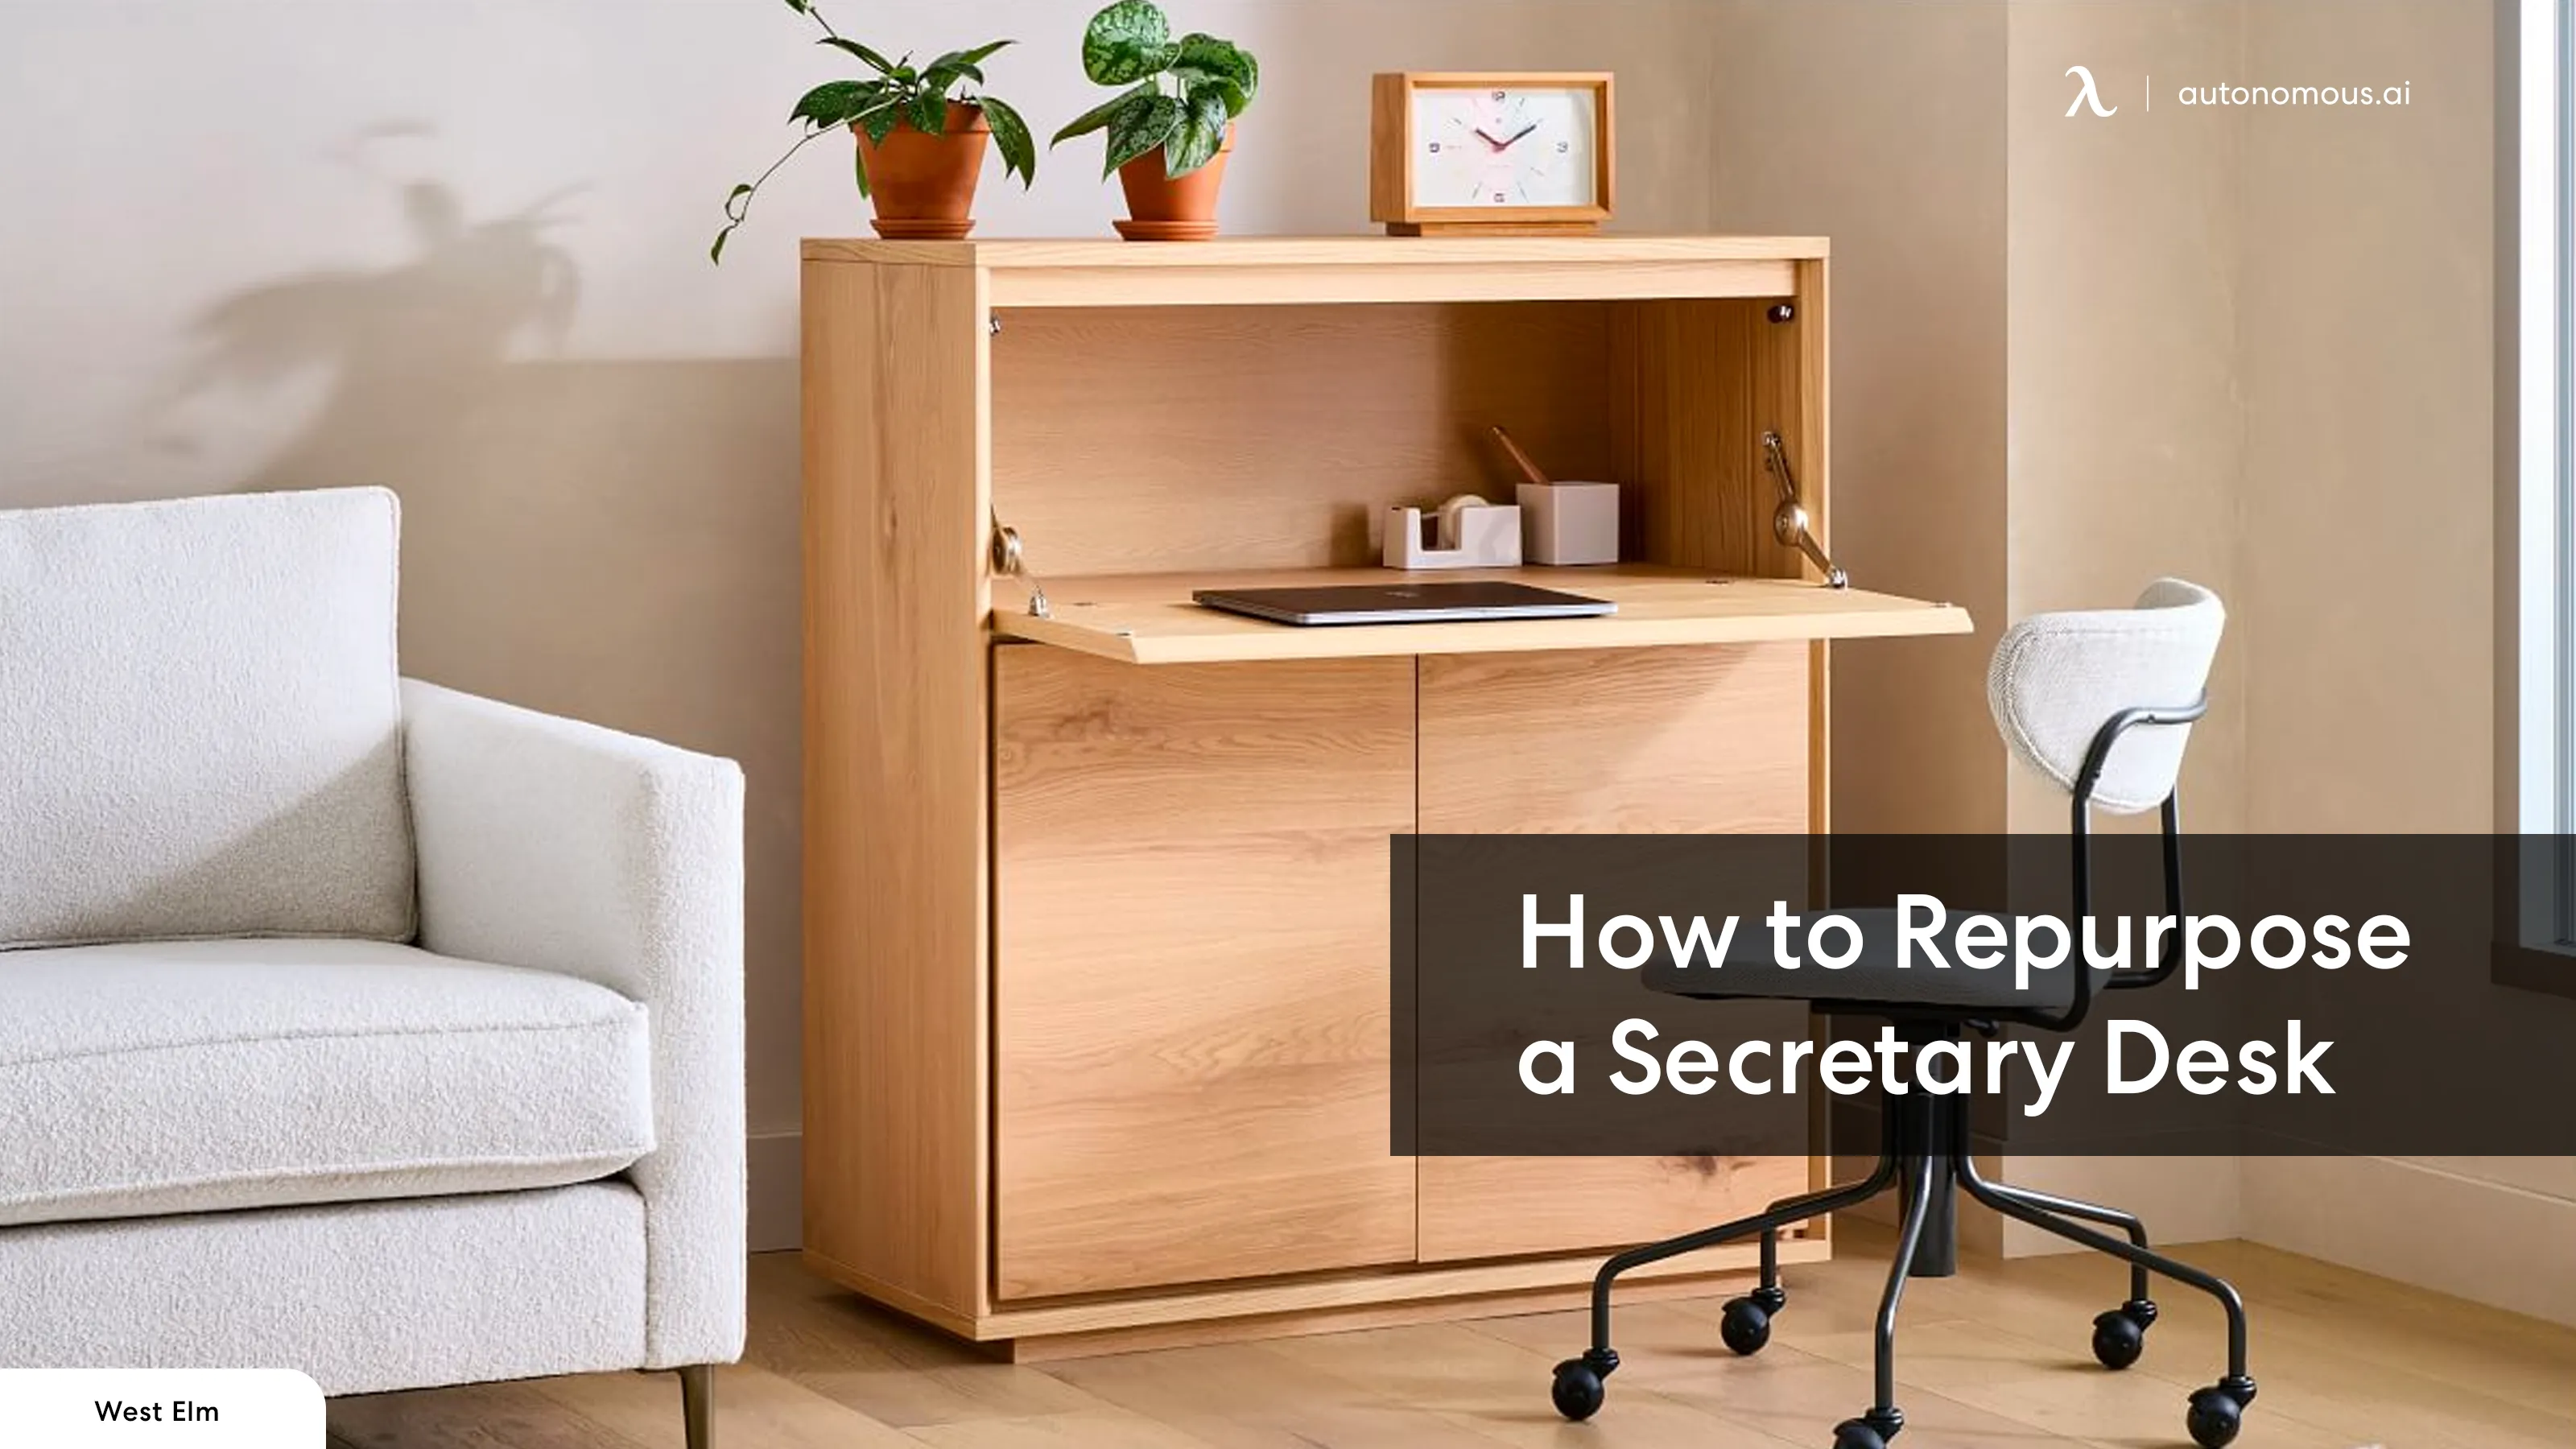 8 Simple Steps to Repurpose Your Secretary Desk